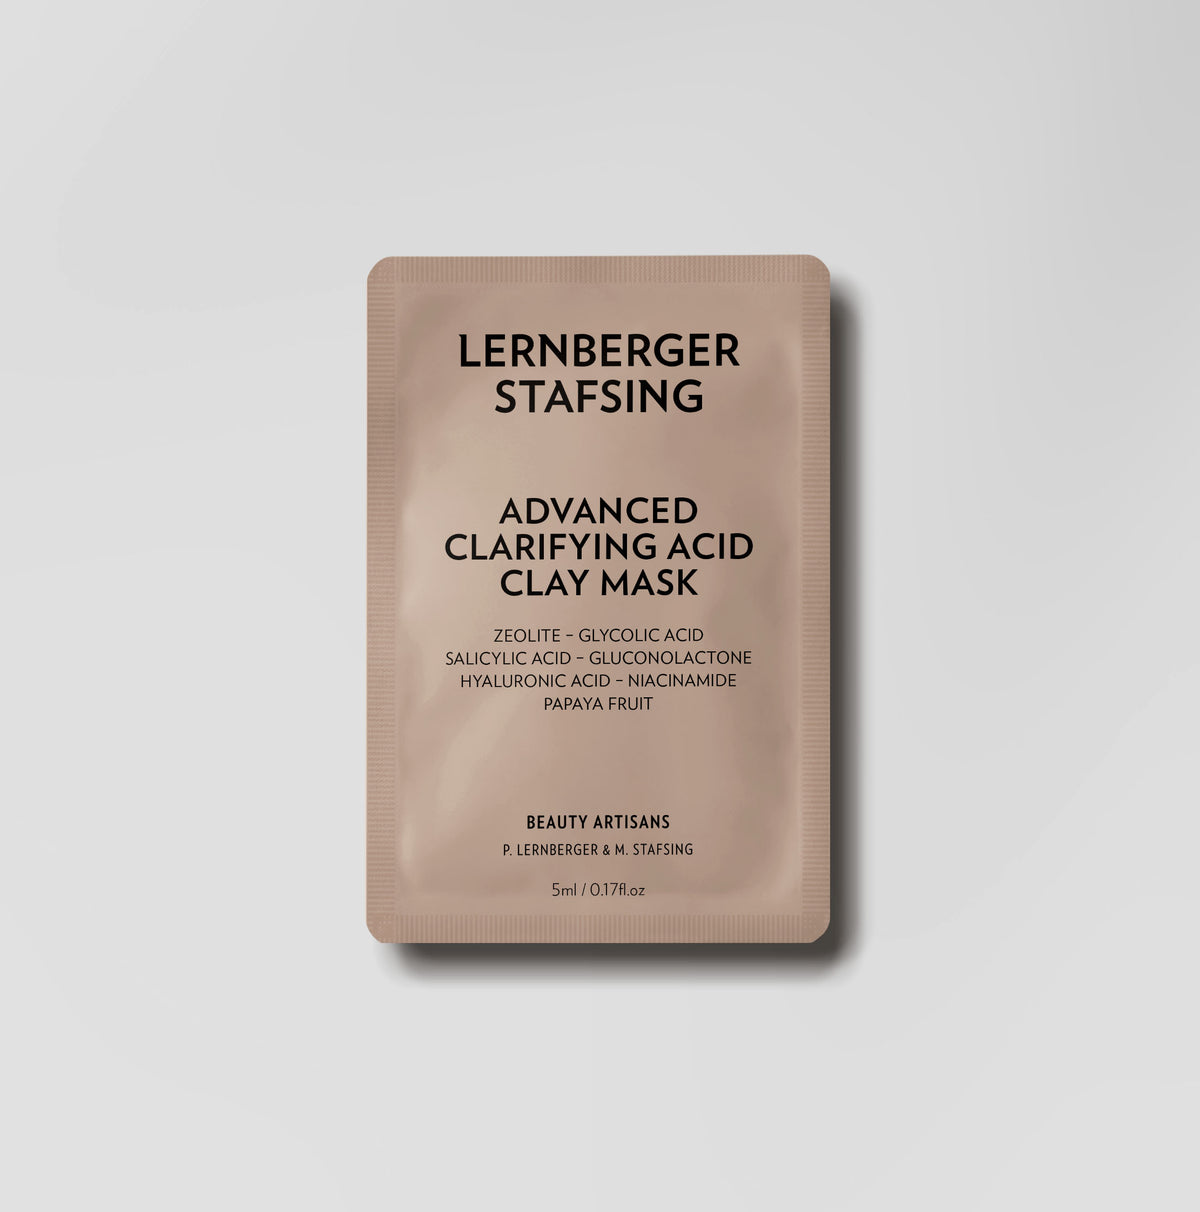 Lernberger Stafsing Clarifying Acid Clay Mask (5ml Sample)